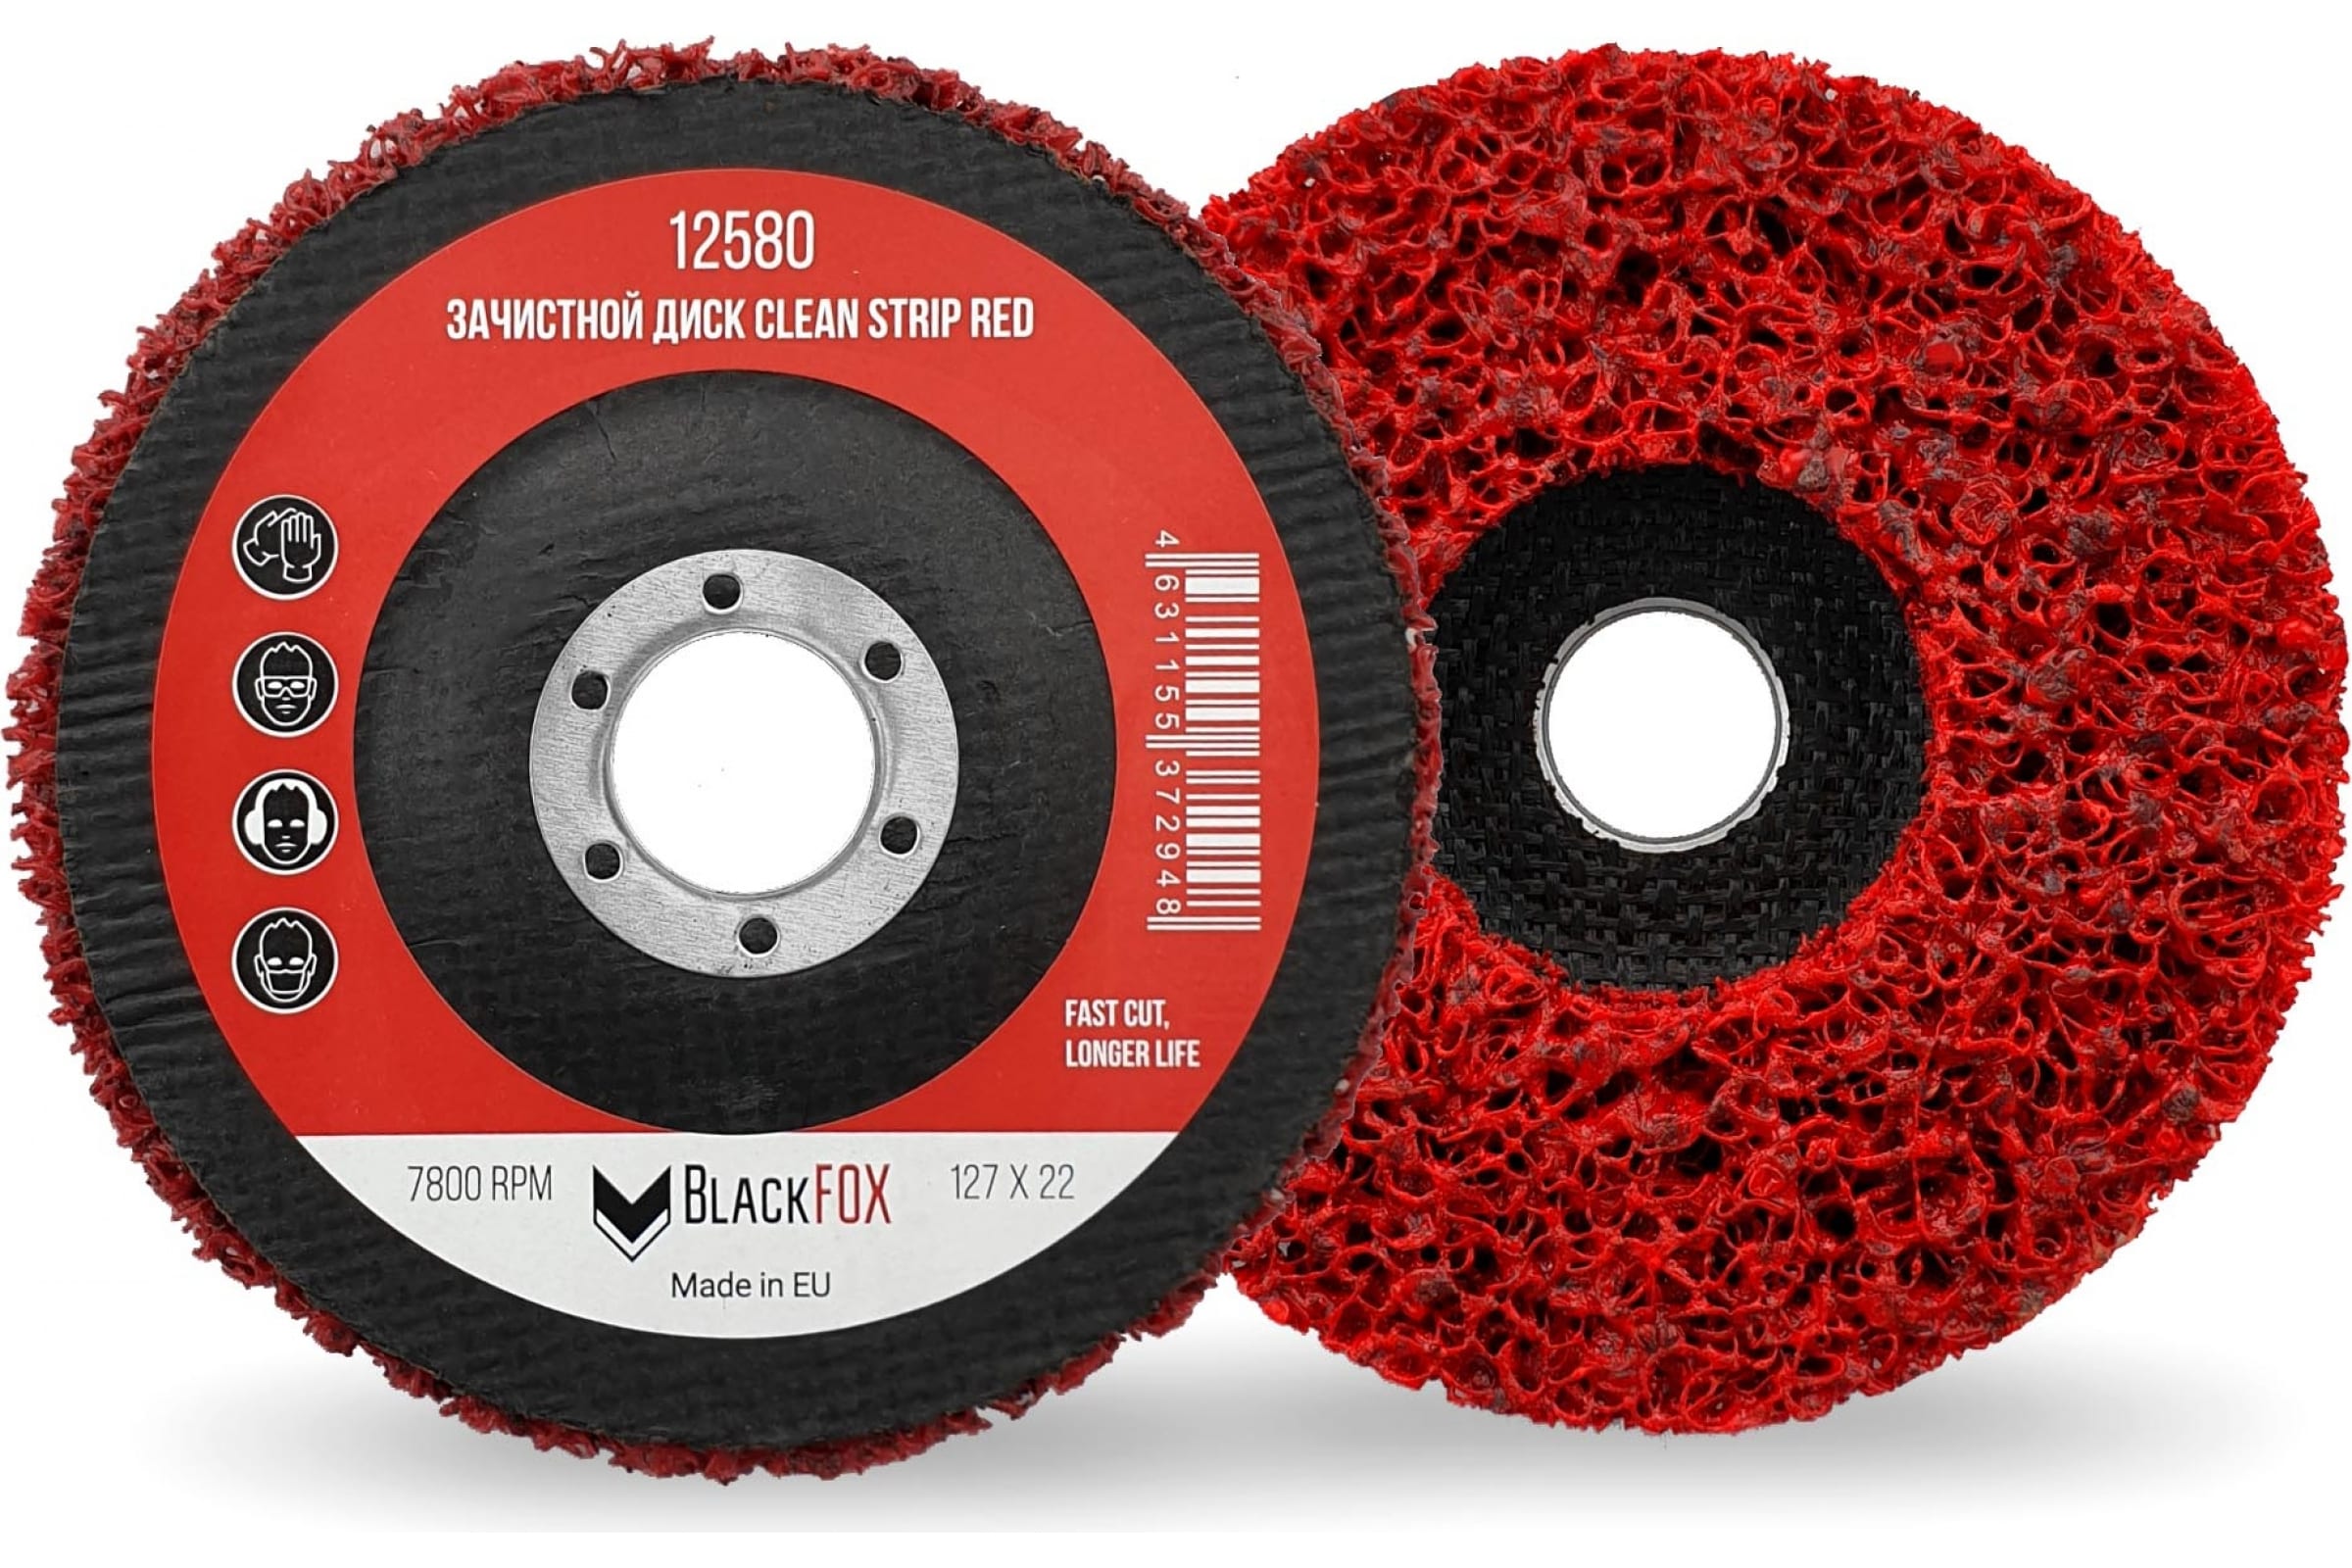 BlackFox Диск Clean Strip RED фибр.оправка под УШМ, 127х22мм 12580